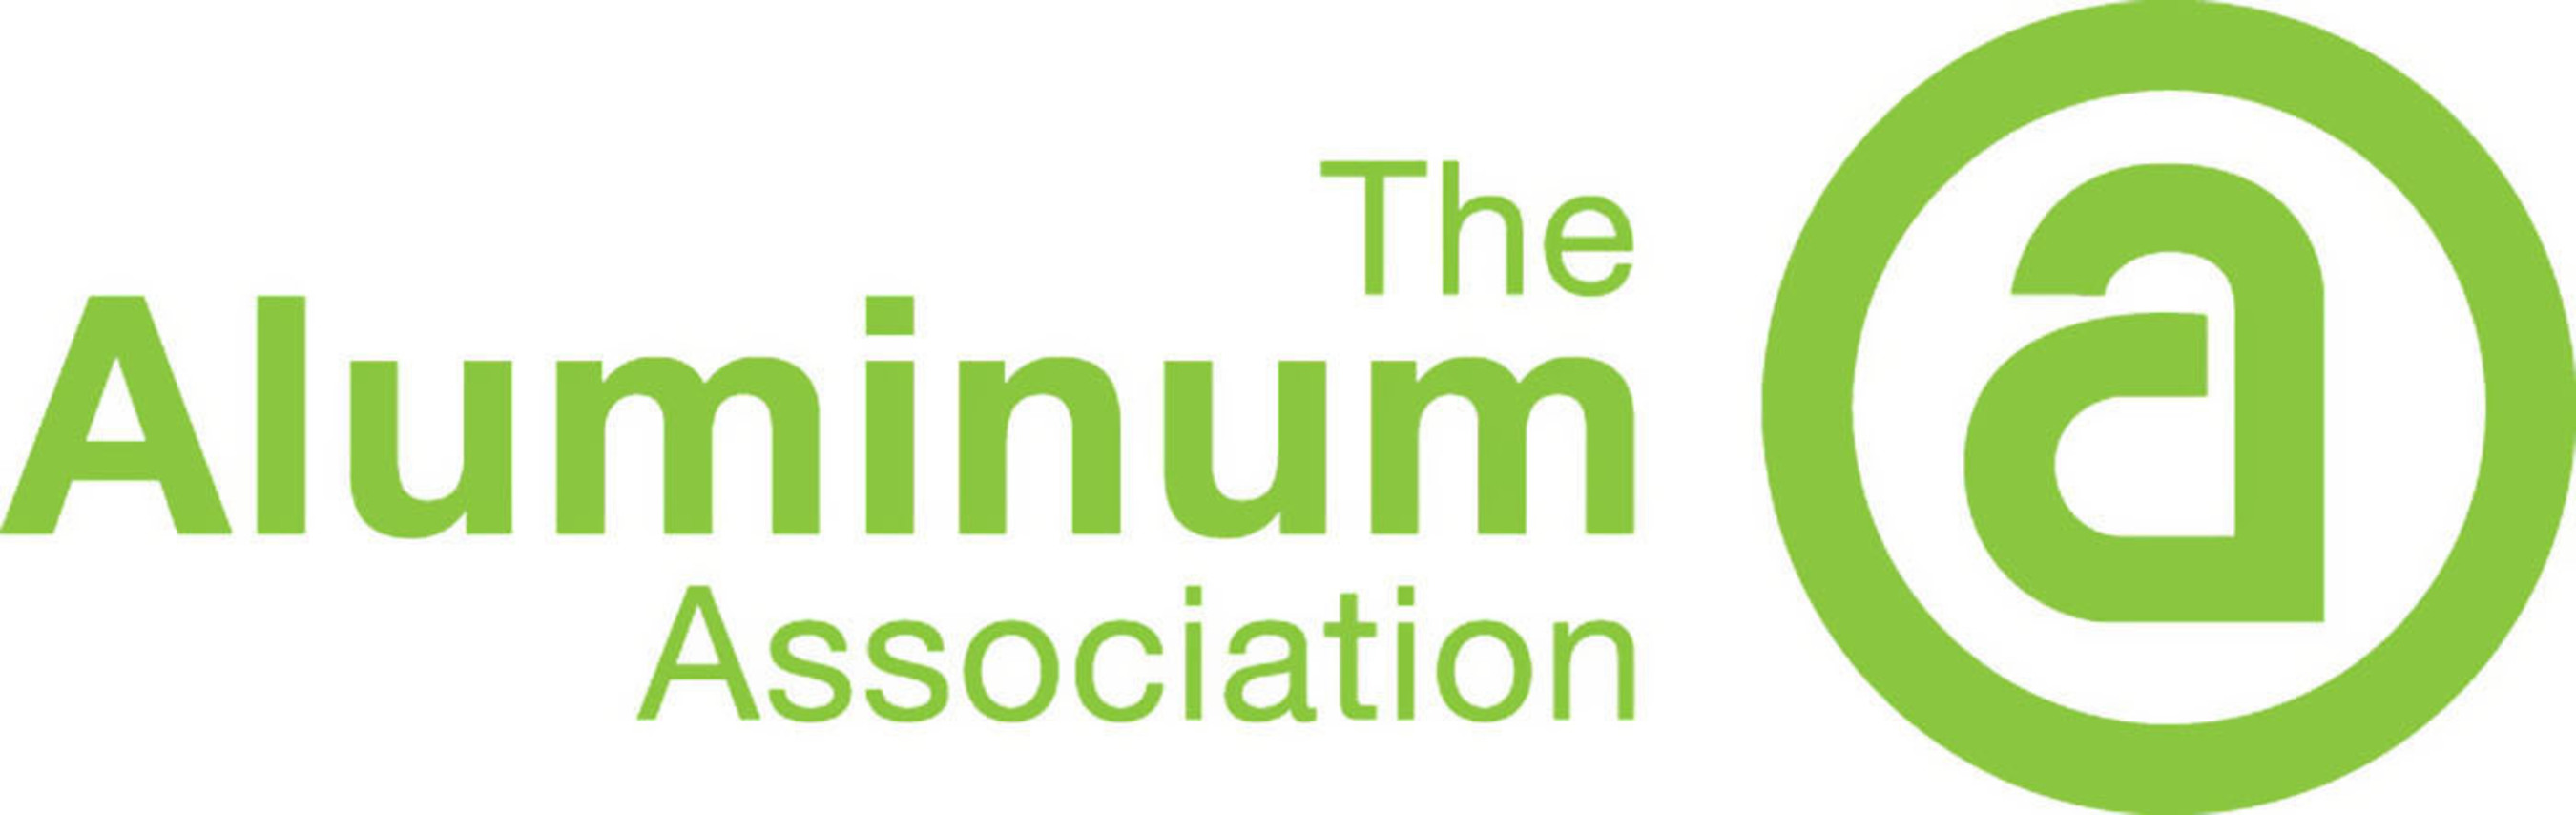 Aluminium Association Logo.